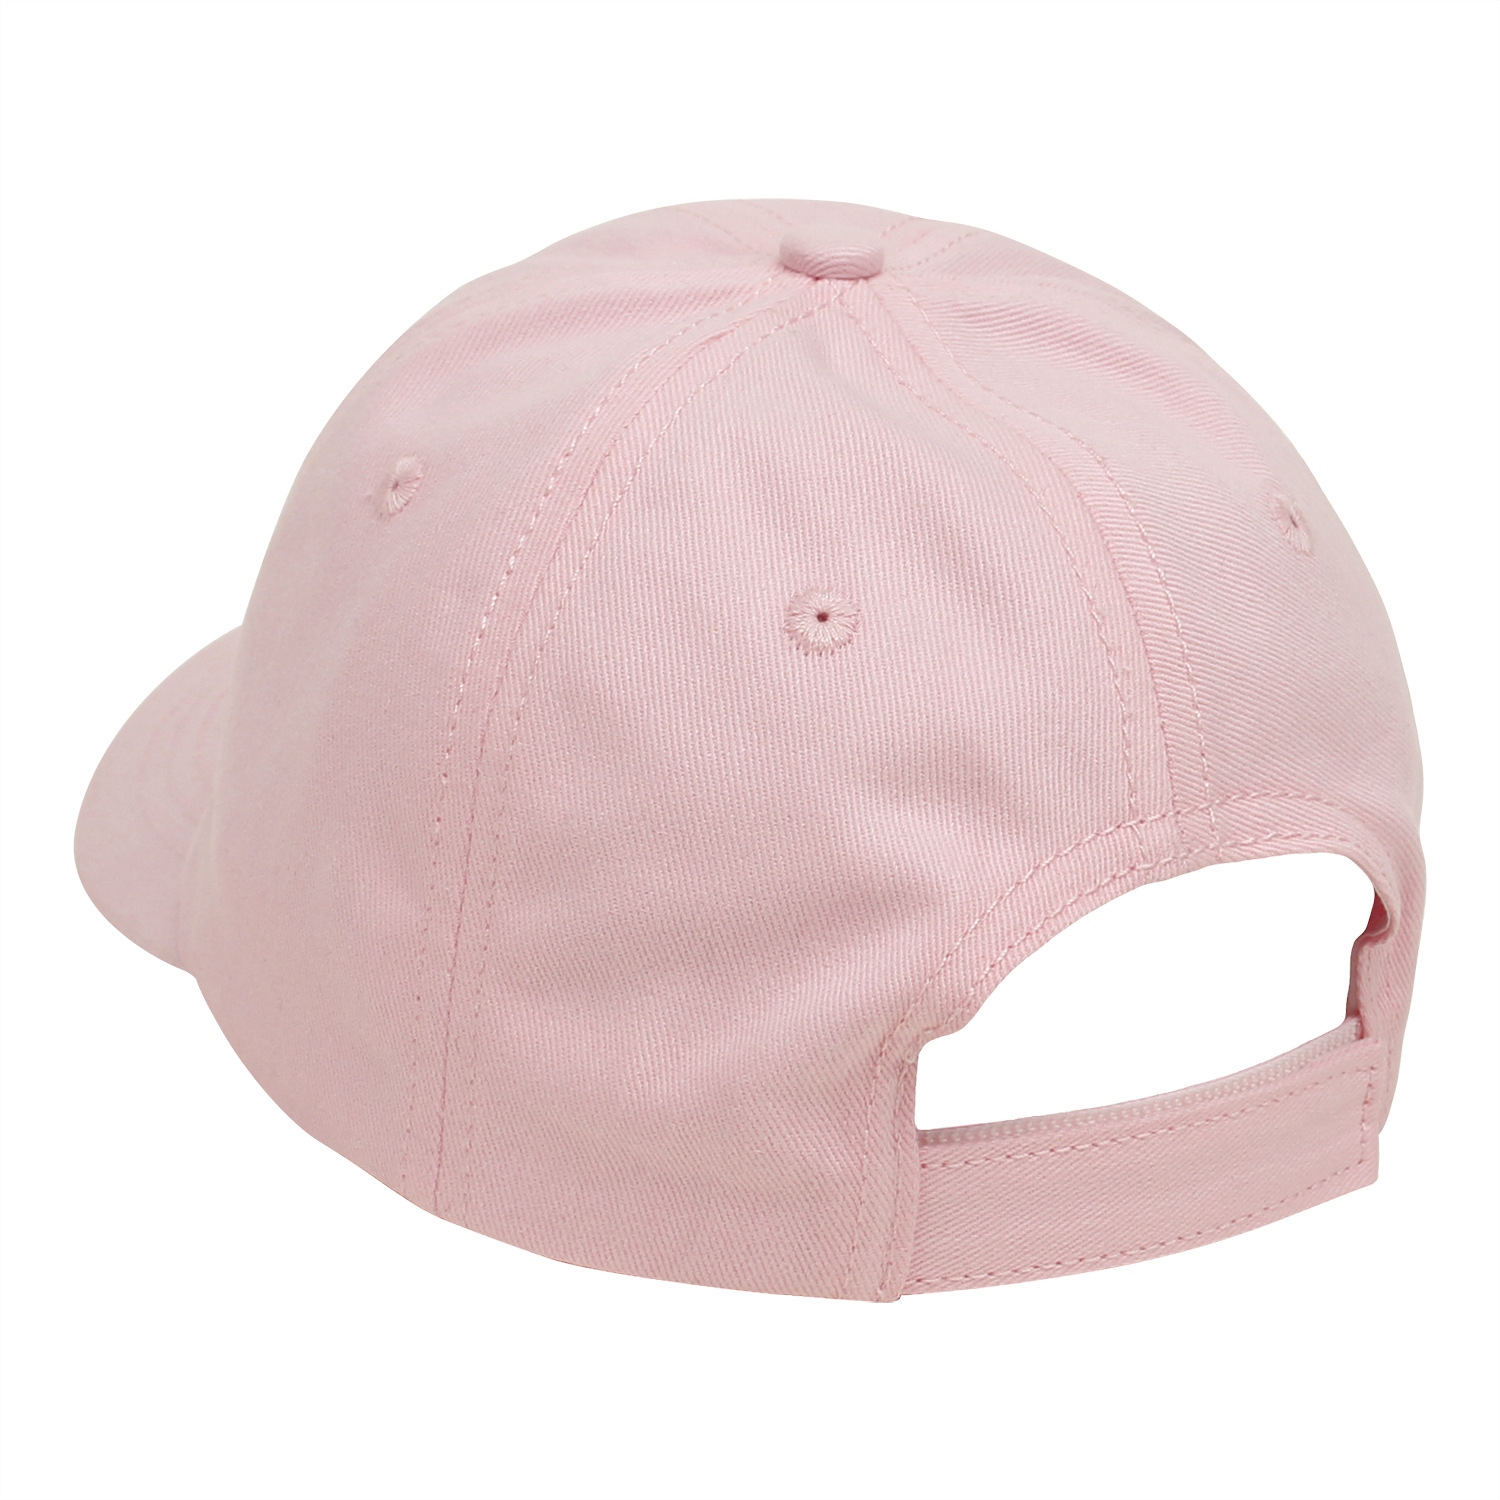 2023 New Children Sport Visors Hats Solid Color Adjustable Baseball Cap for Baby Soft Cotton Caps Boys Girls Outdoor Sun Hat